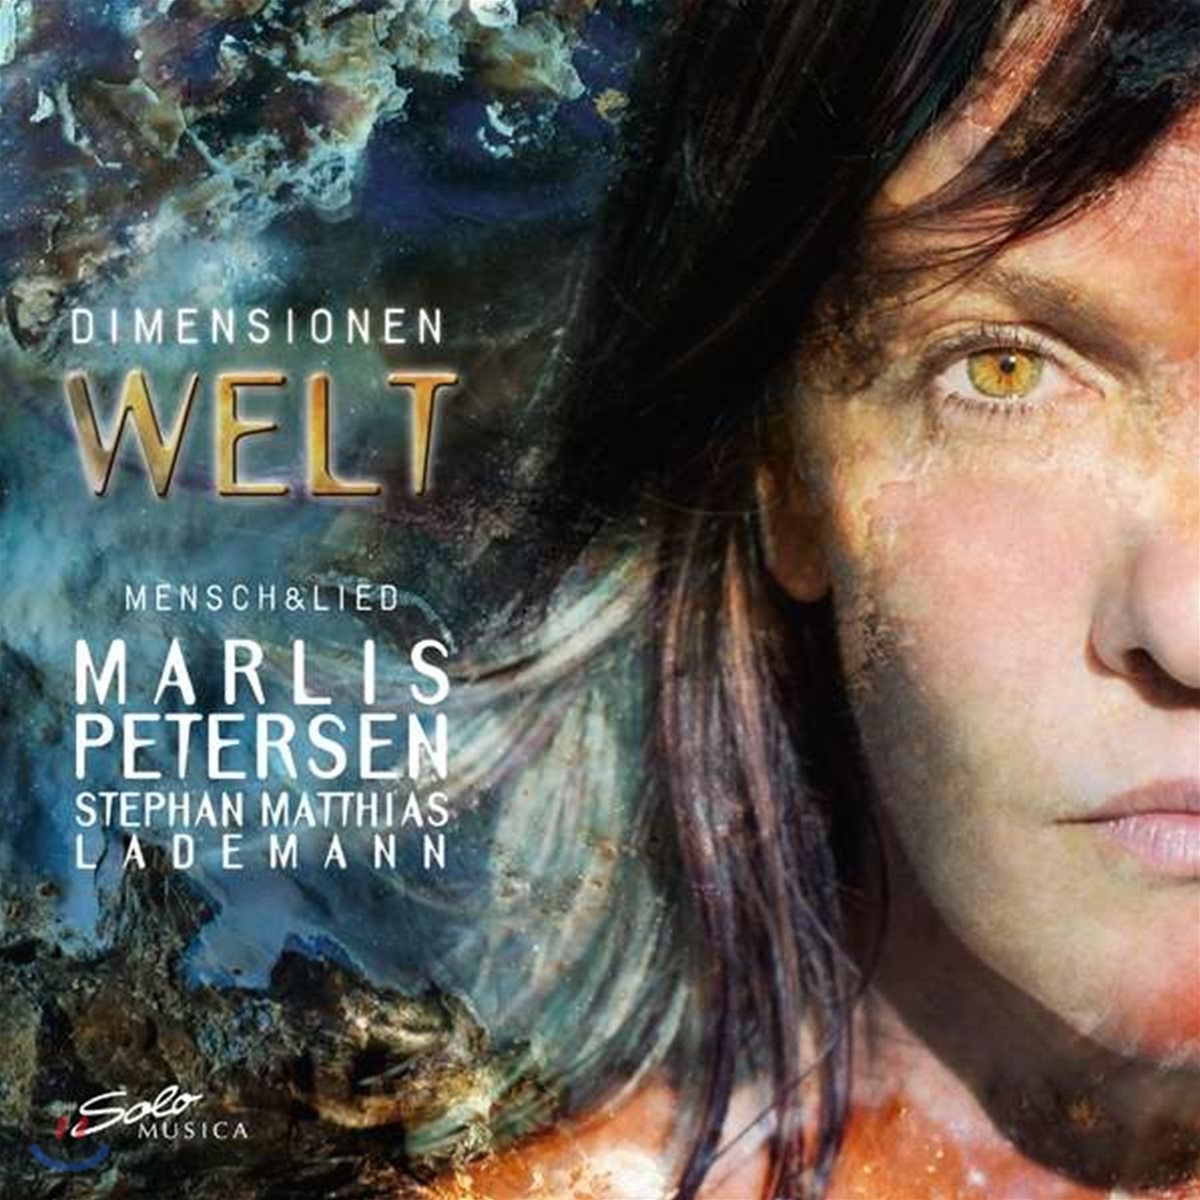 Marlis Petersen 슈베르트 / 로베르트 &amp; 클라라 슈만 / 브람스: 가곡 (Dimensionen Welt - Mensch &amp; Lied)